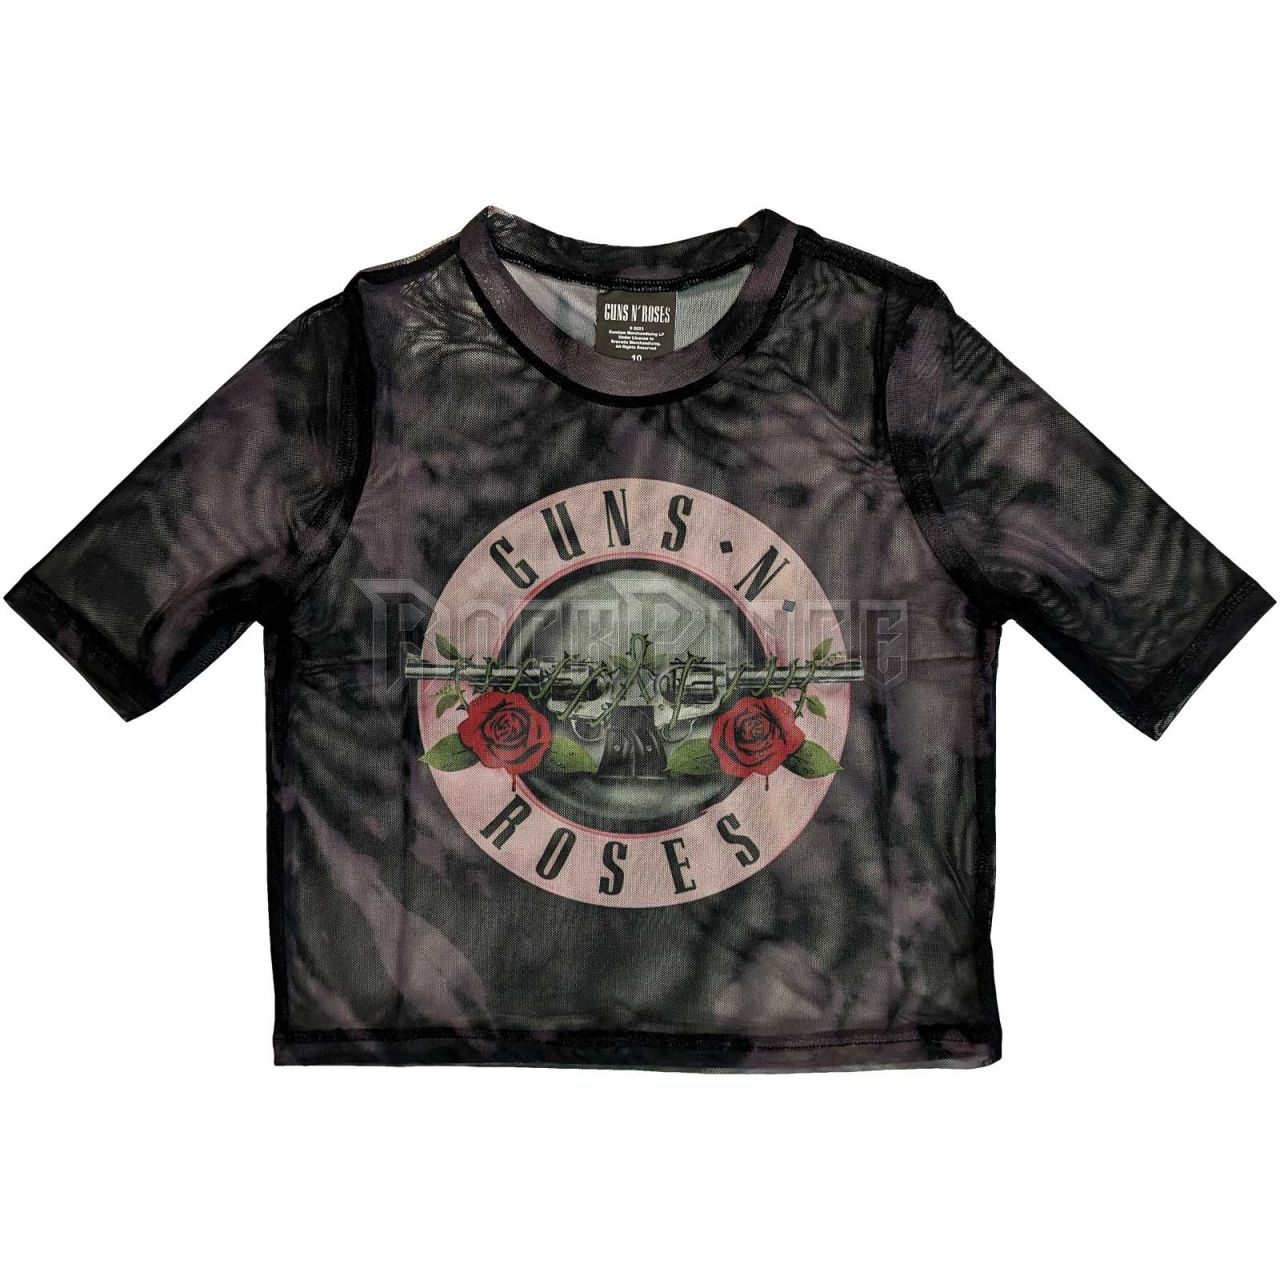 Guns N' Roses - Pink Tint Bullet Logo - női crop top - GNRMCT142LB